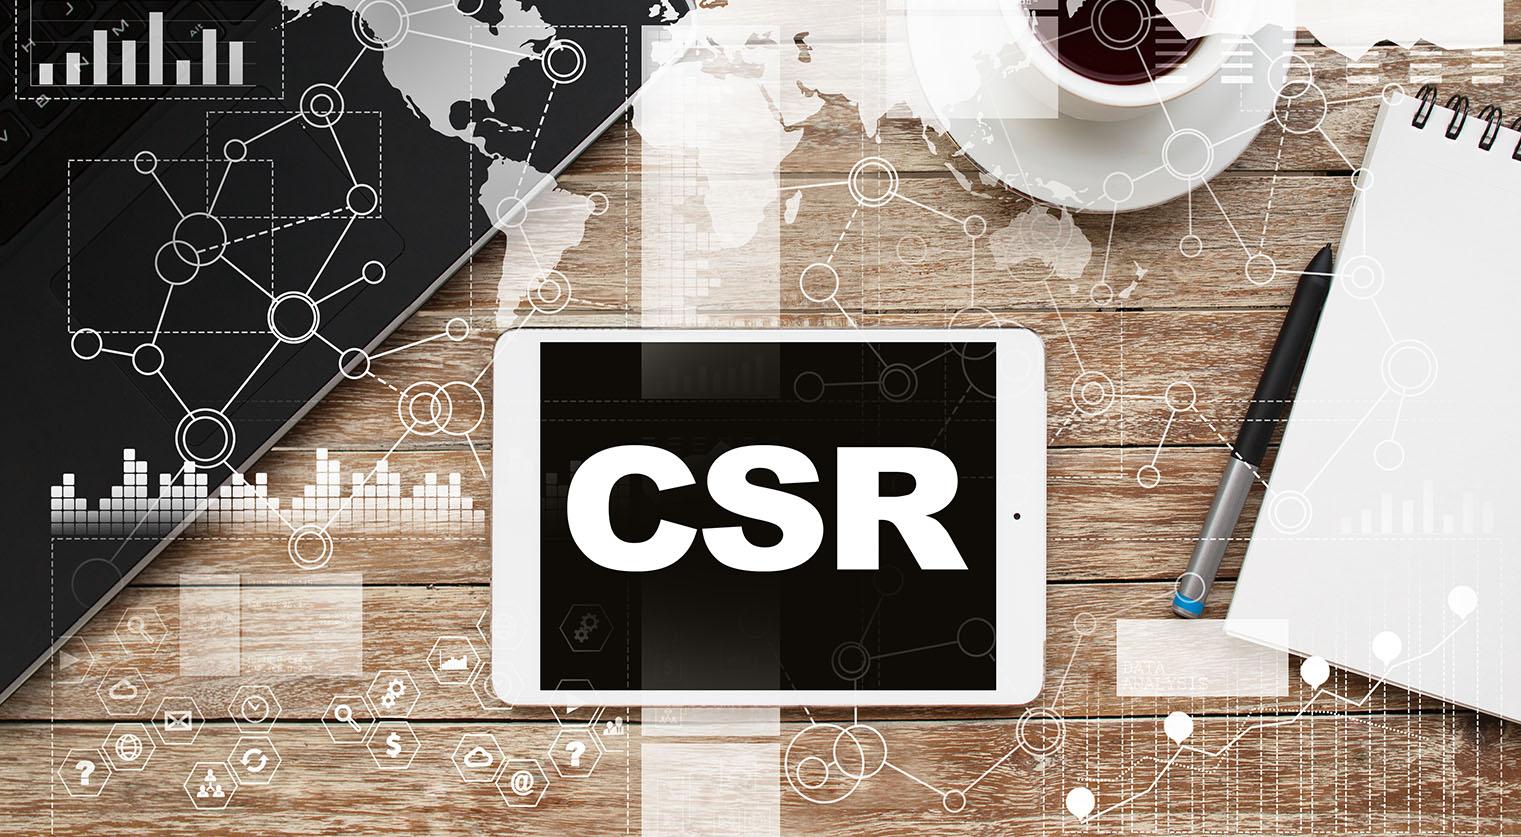 CSR - Corporate Stakeholder Responsibility